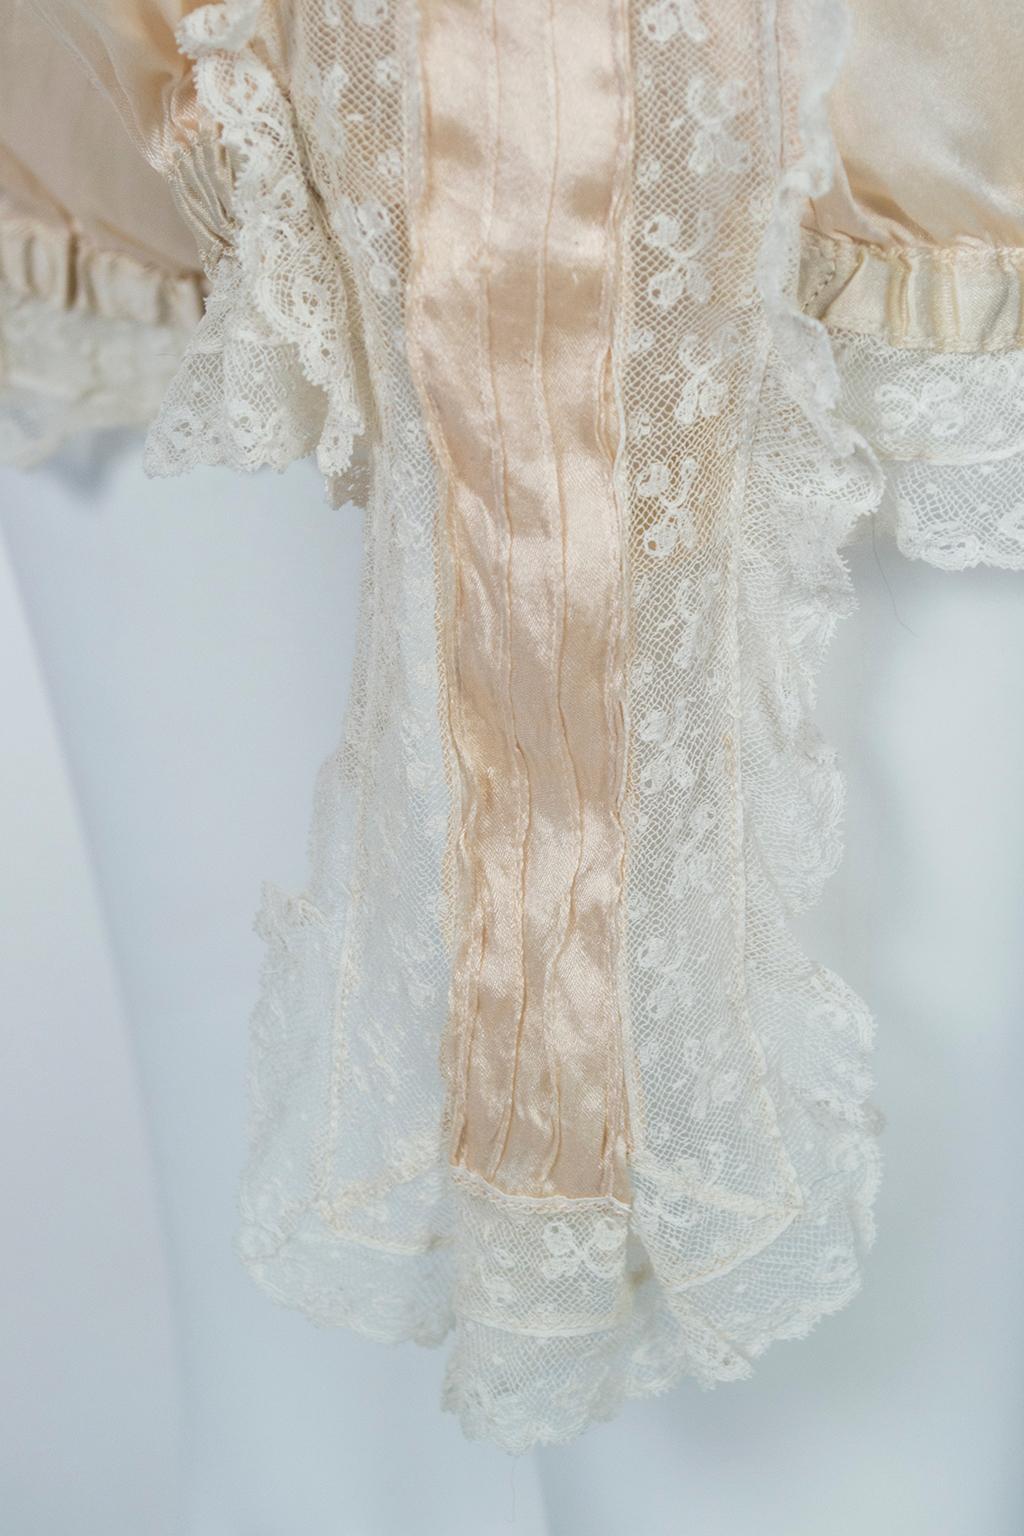 Edwardian Blush Silk Charmeuse and Lace ¾ Bloomer Pantalettes - Medium, 1900s 5